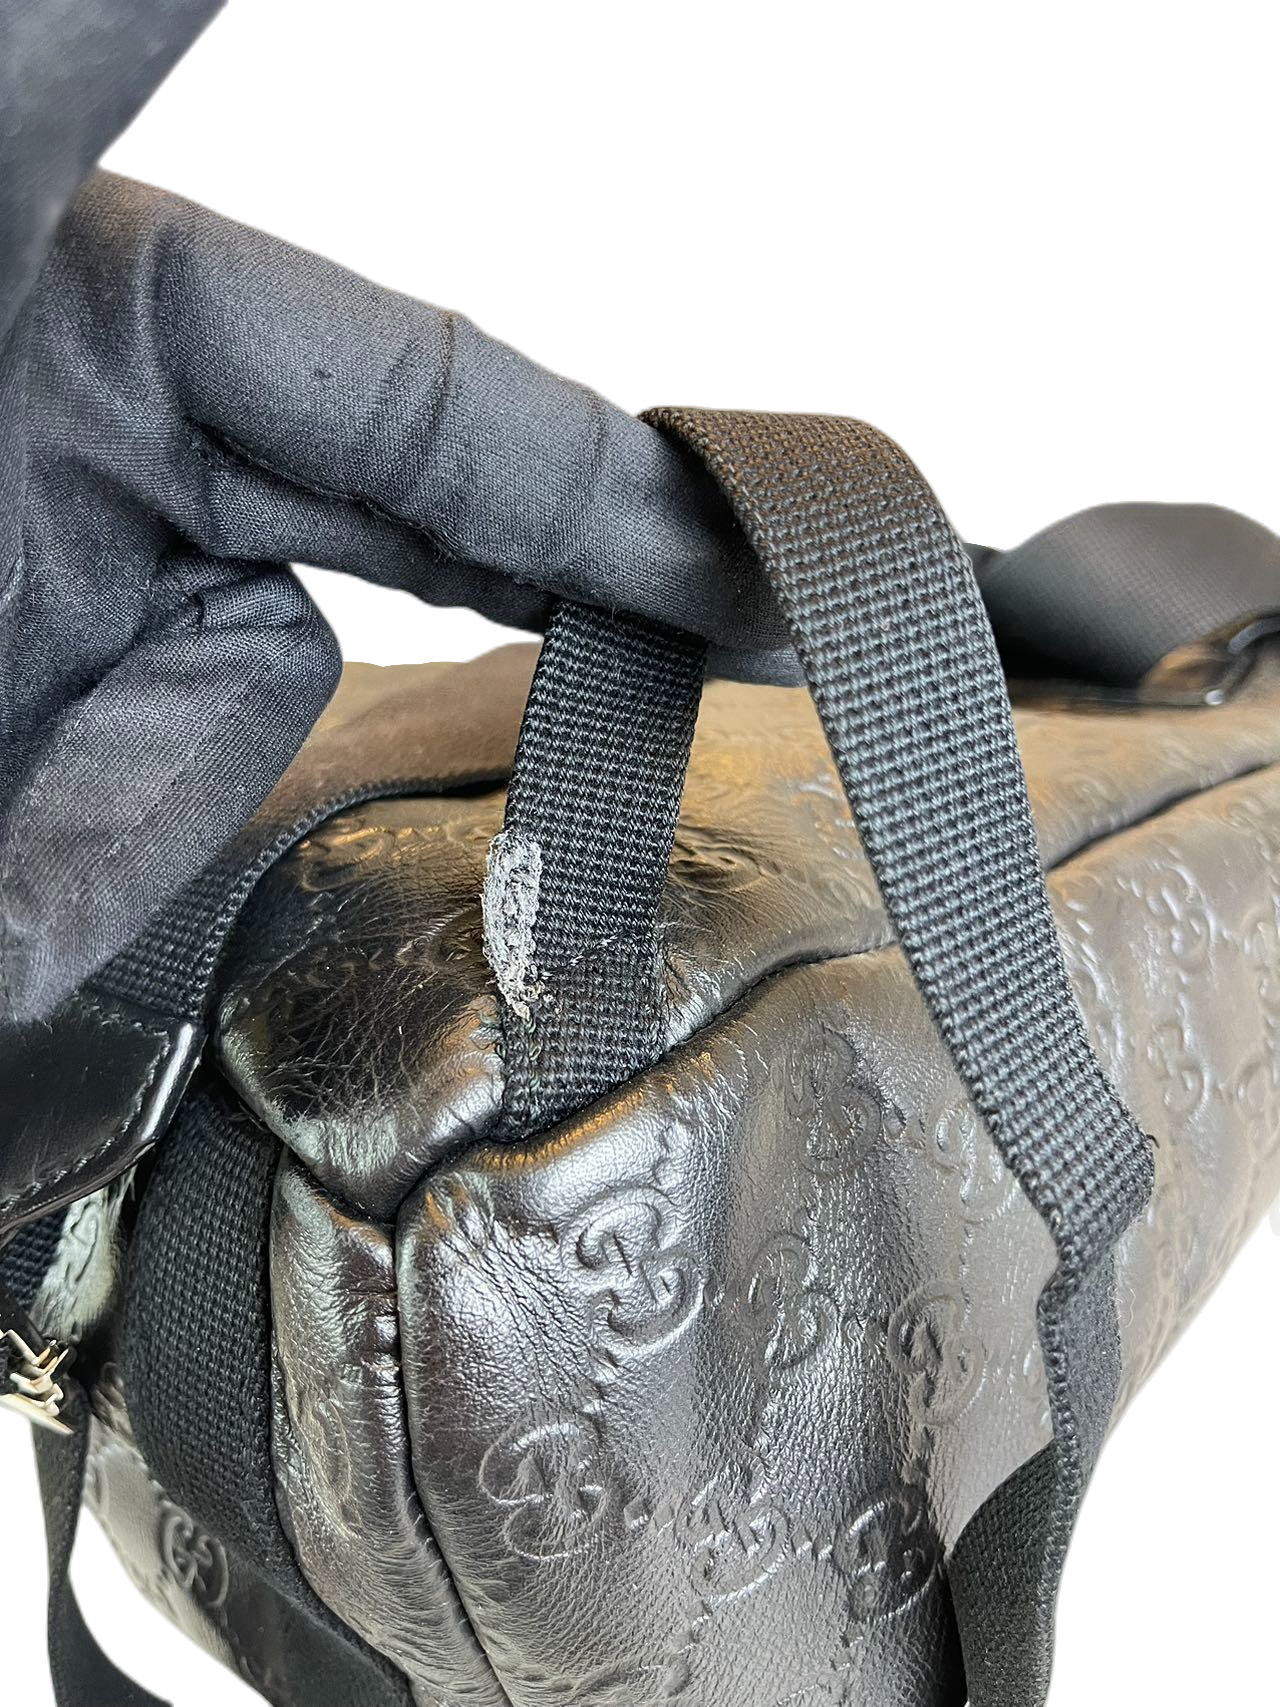 Preloved Gucci GG Logo Printed Black Leather Backpack